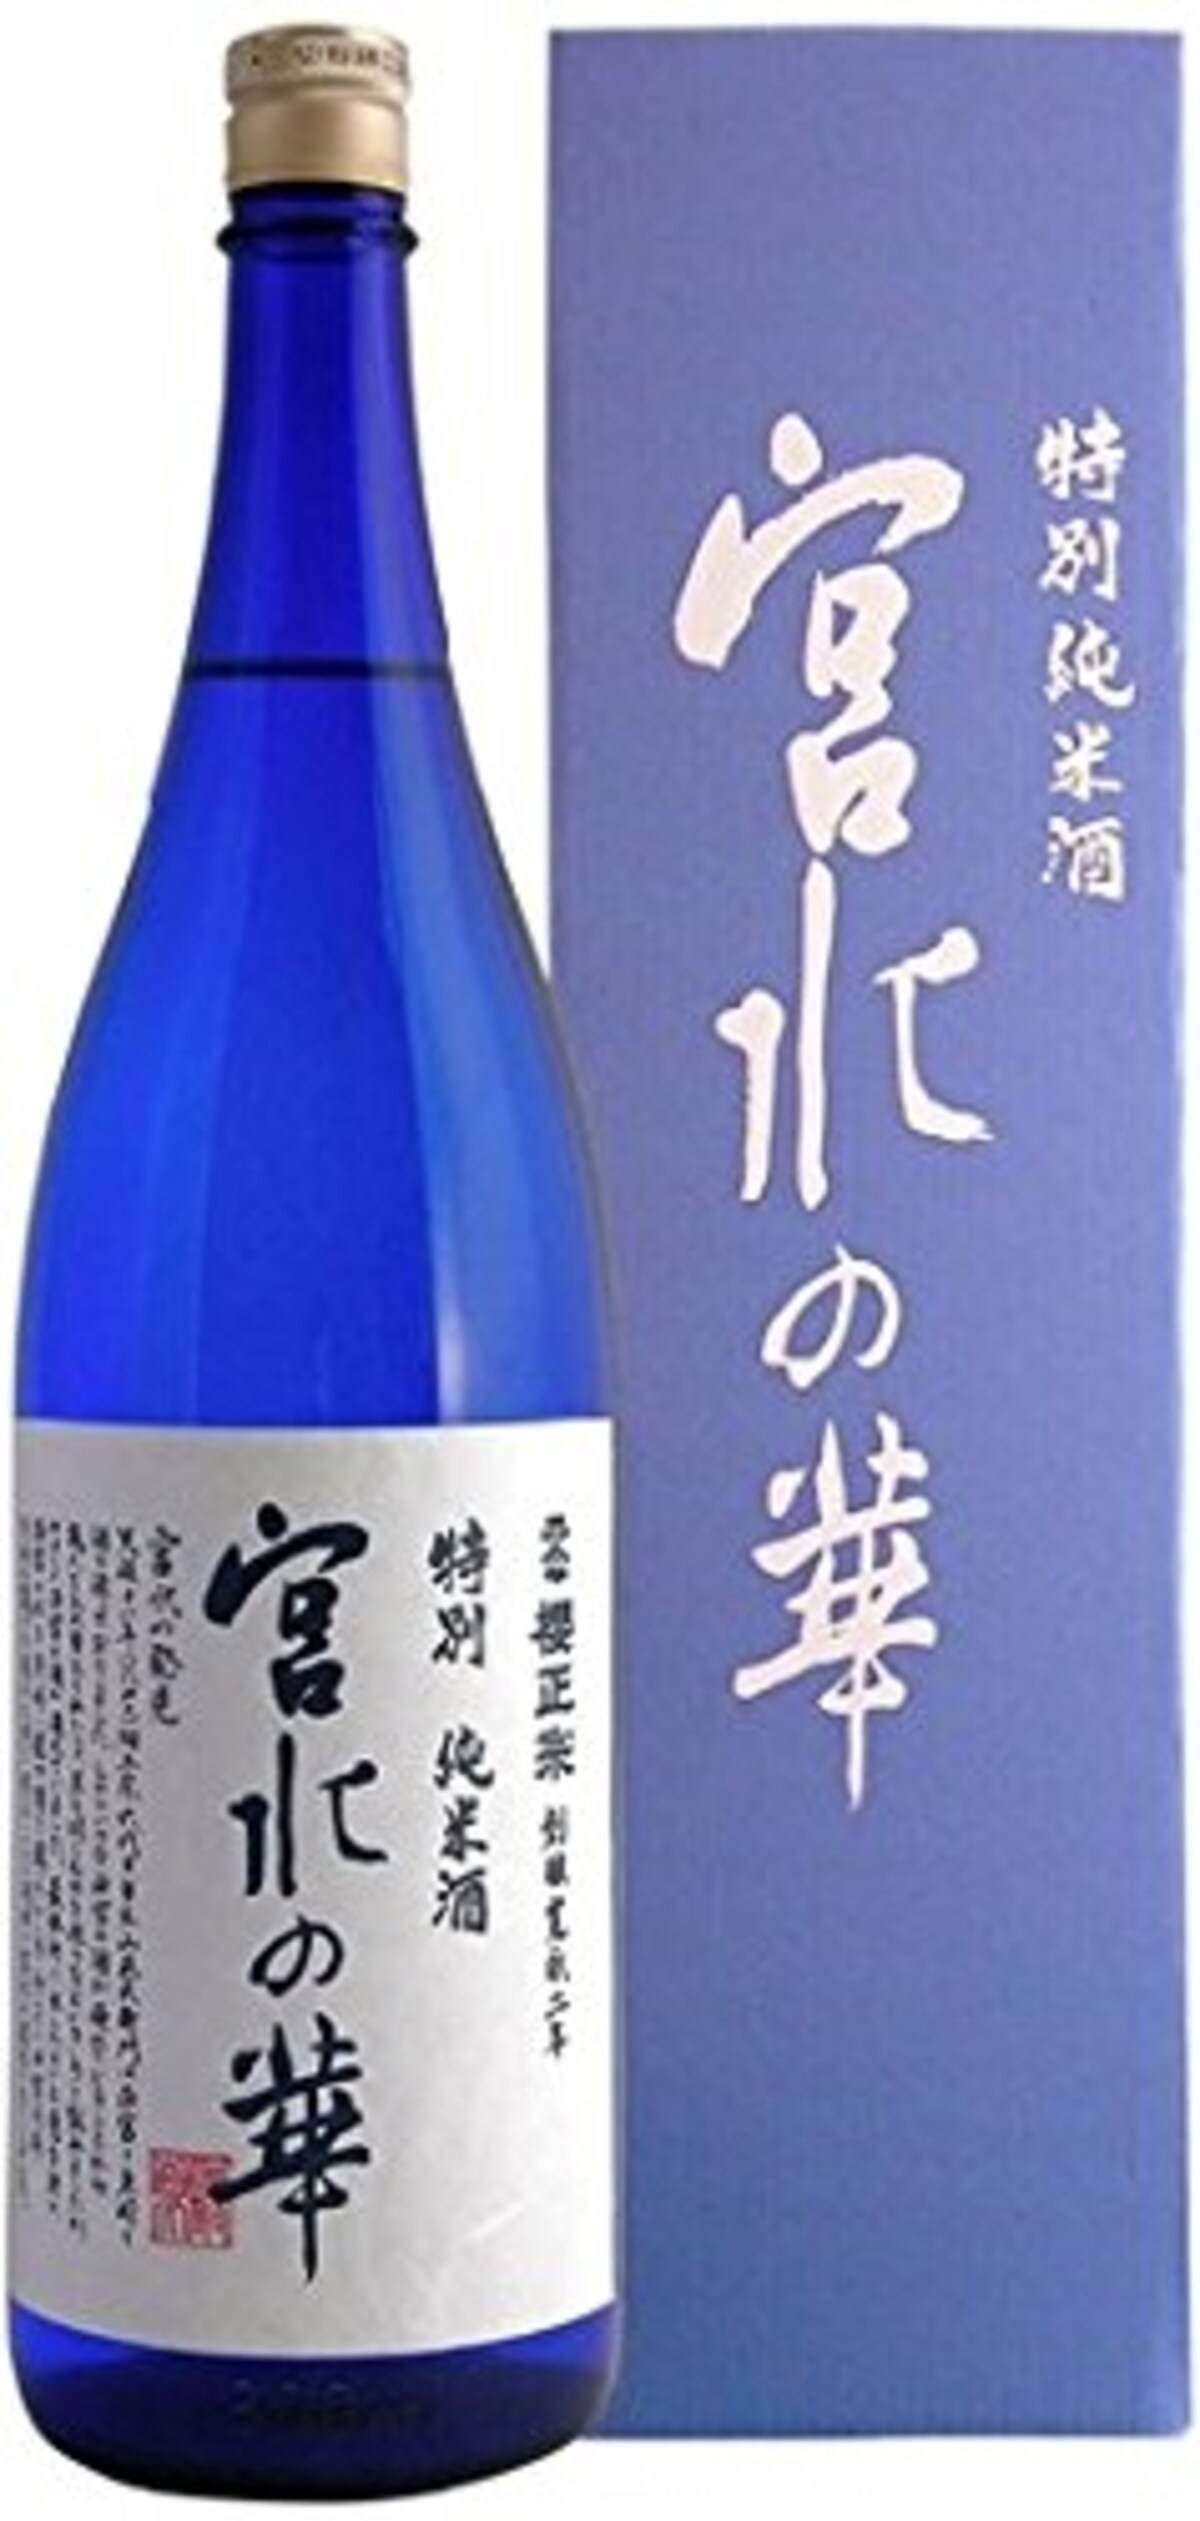  宮水の華 特別純米酒 瓶 1800ml画像2 